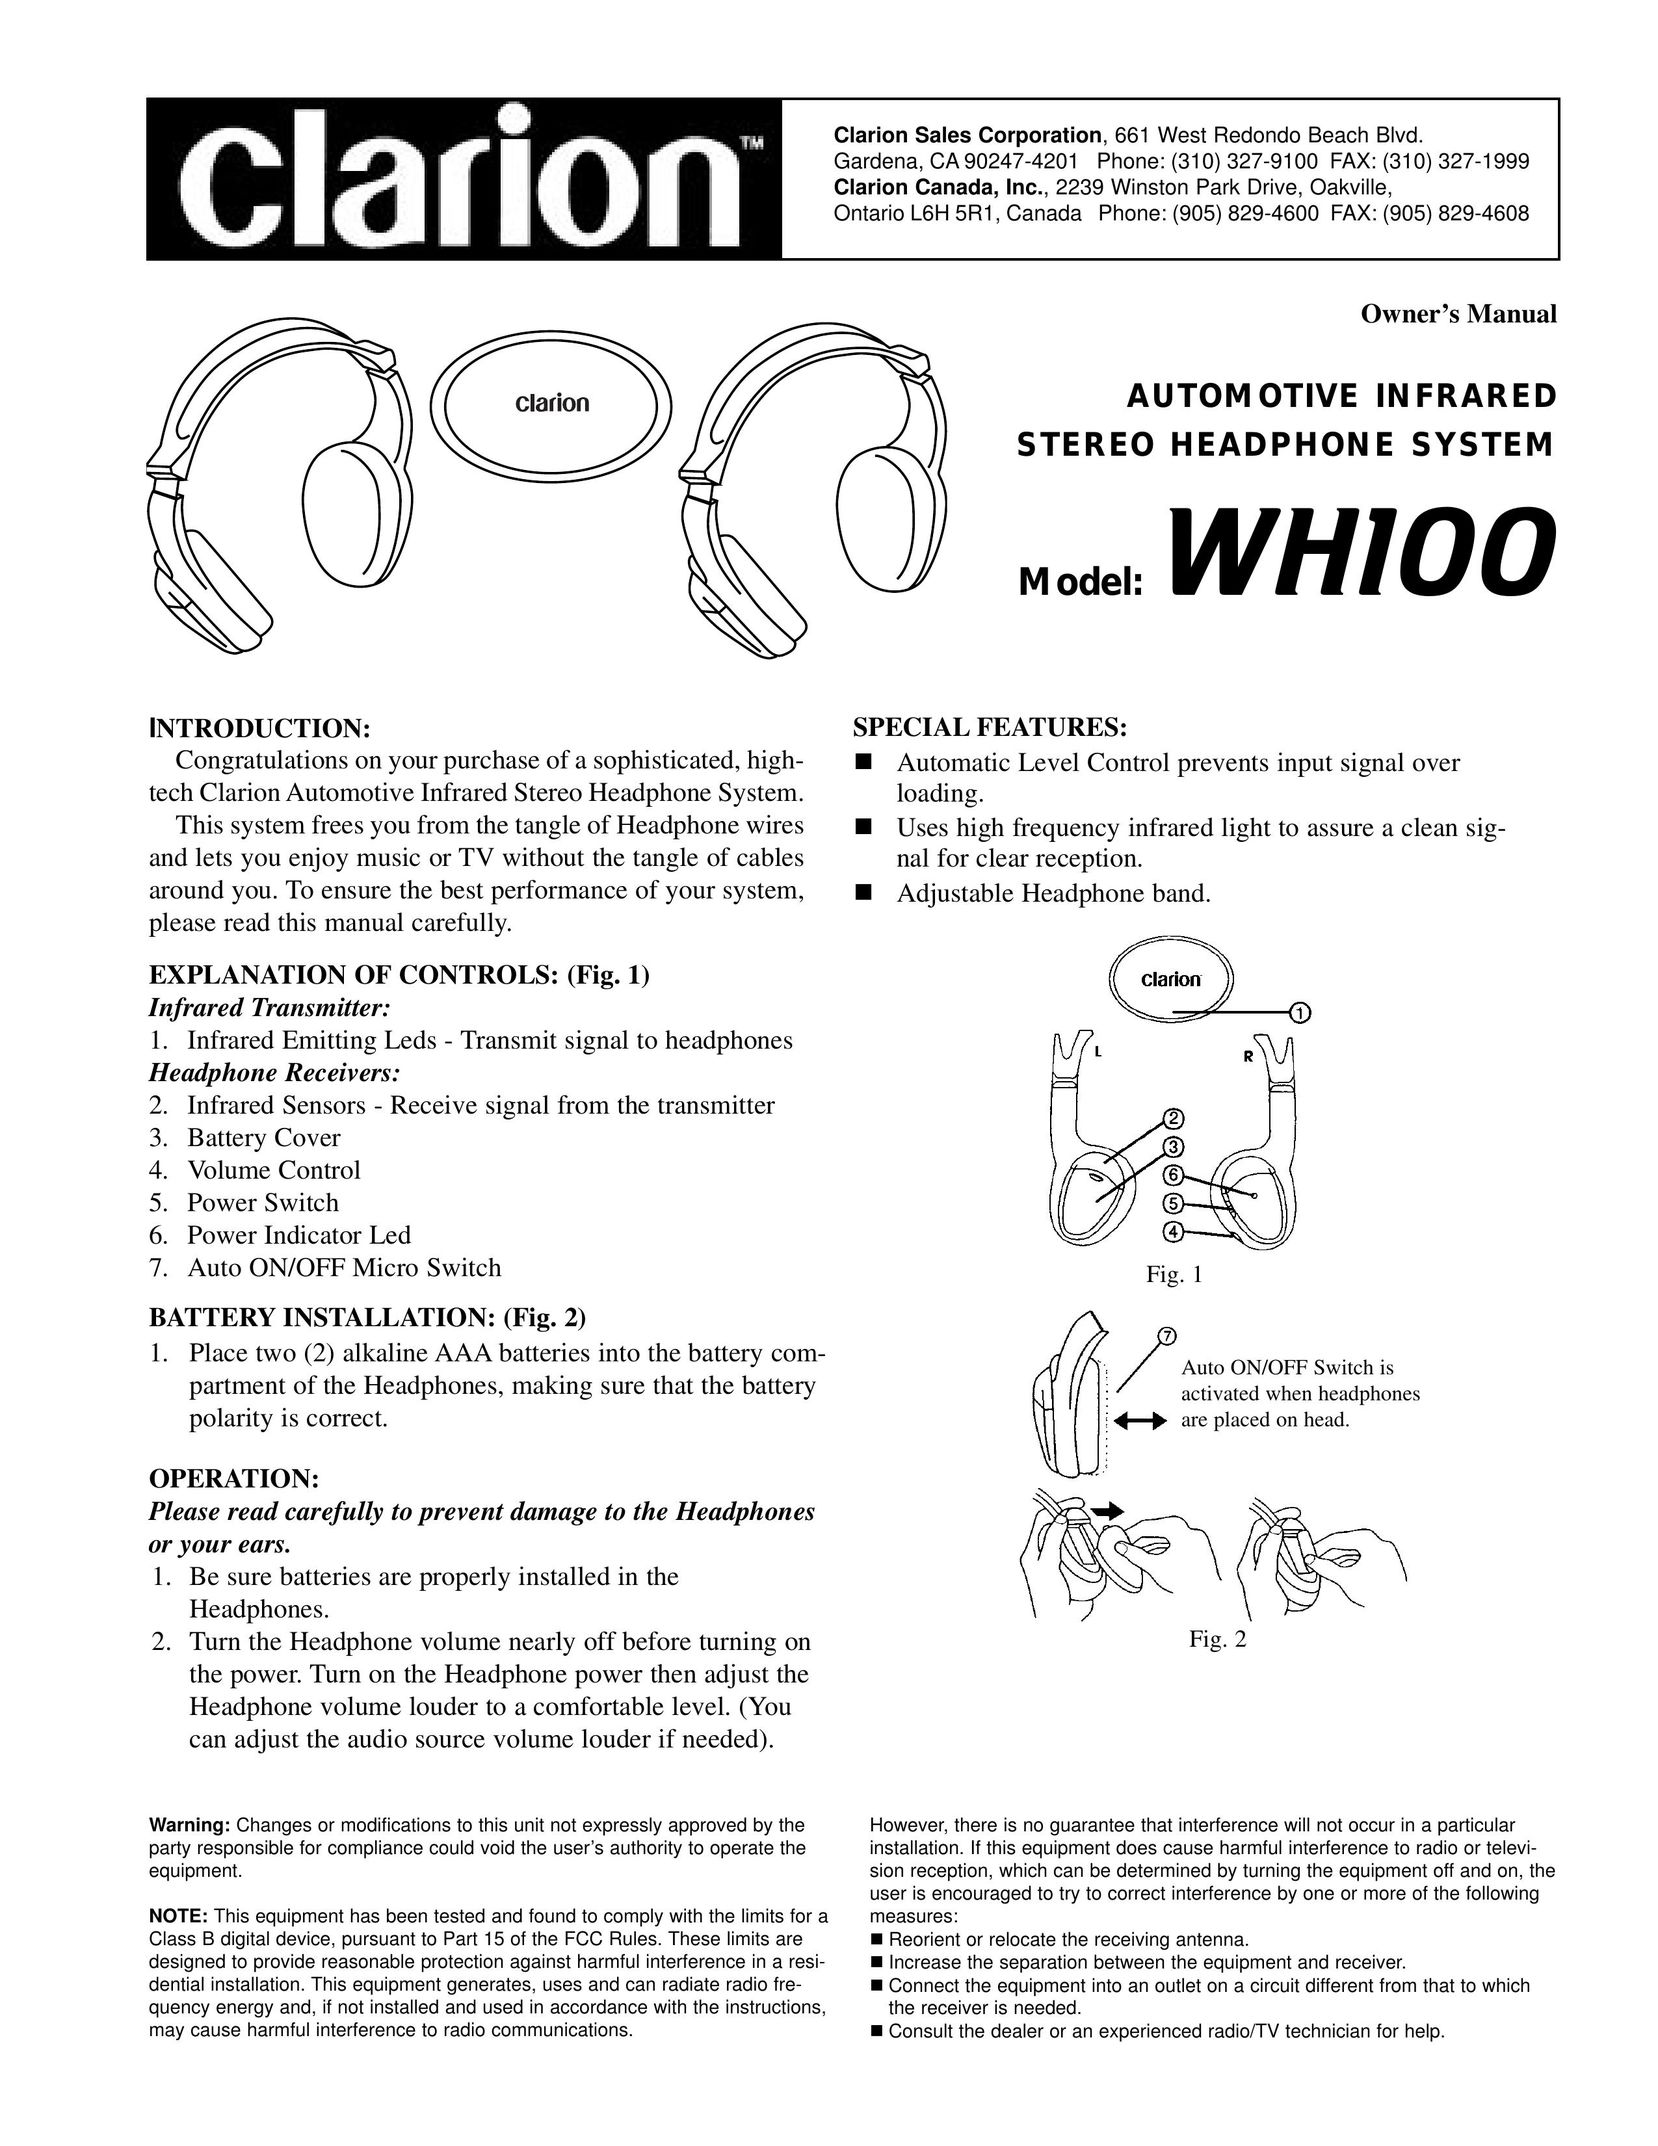 Clarion WH 100 Headphones User Manual